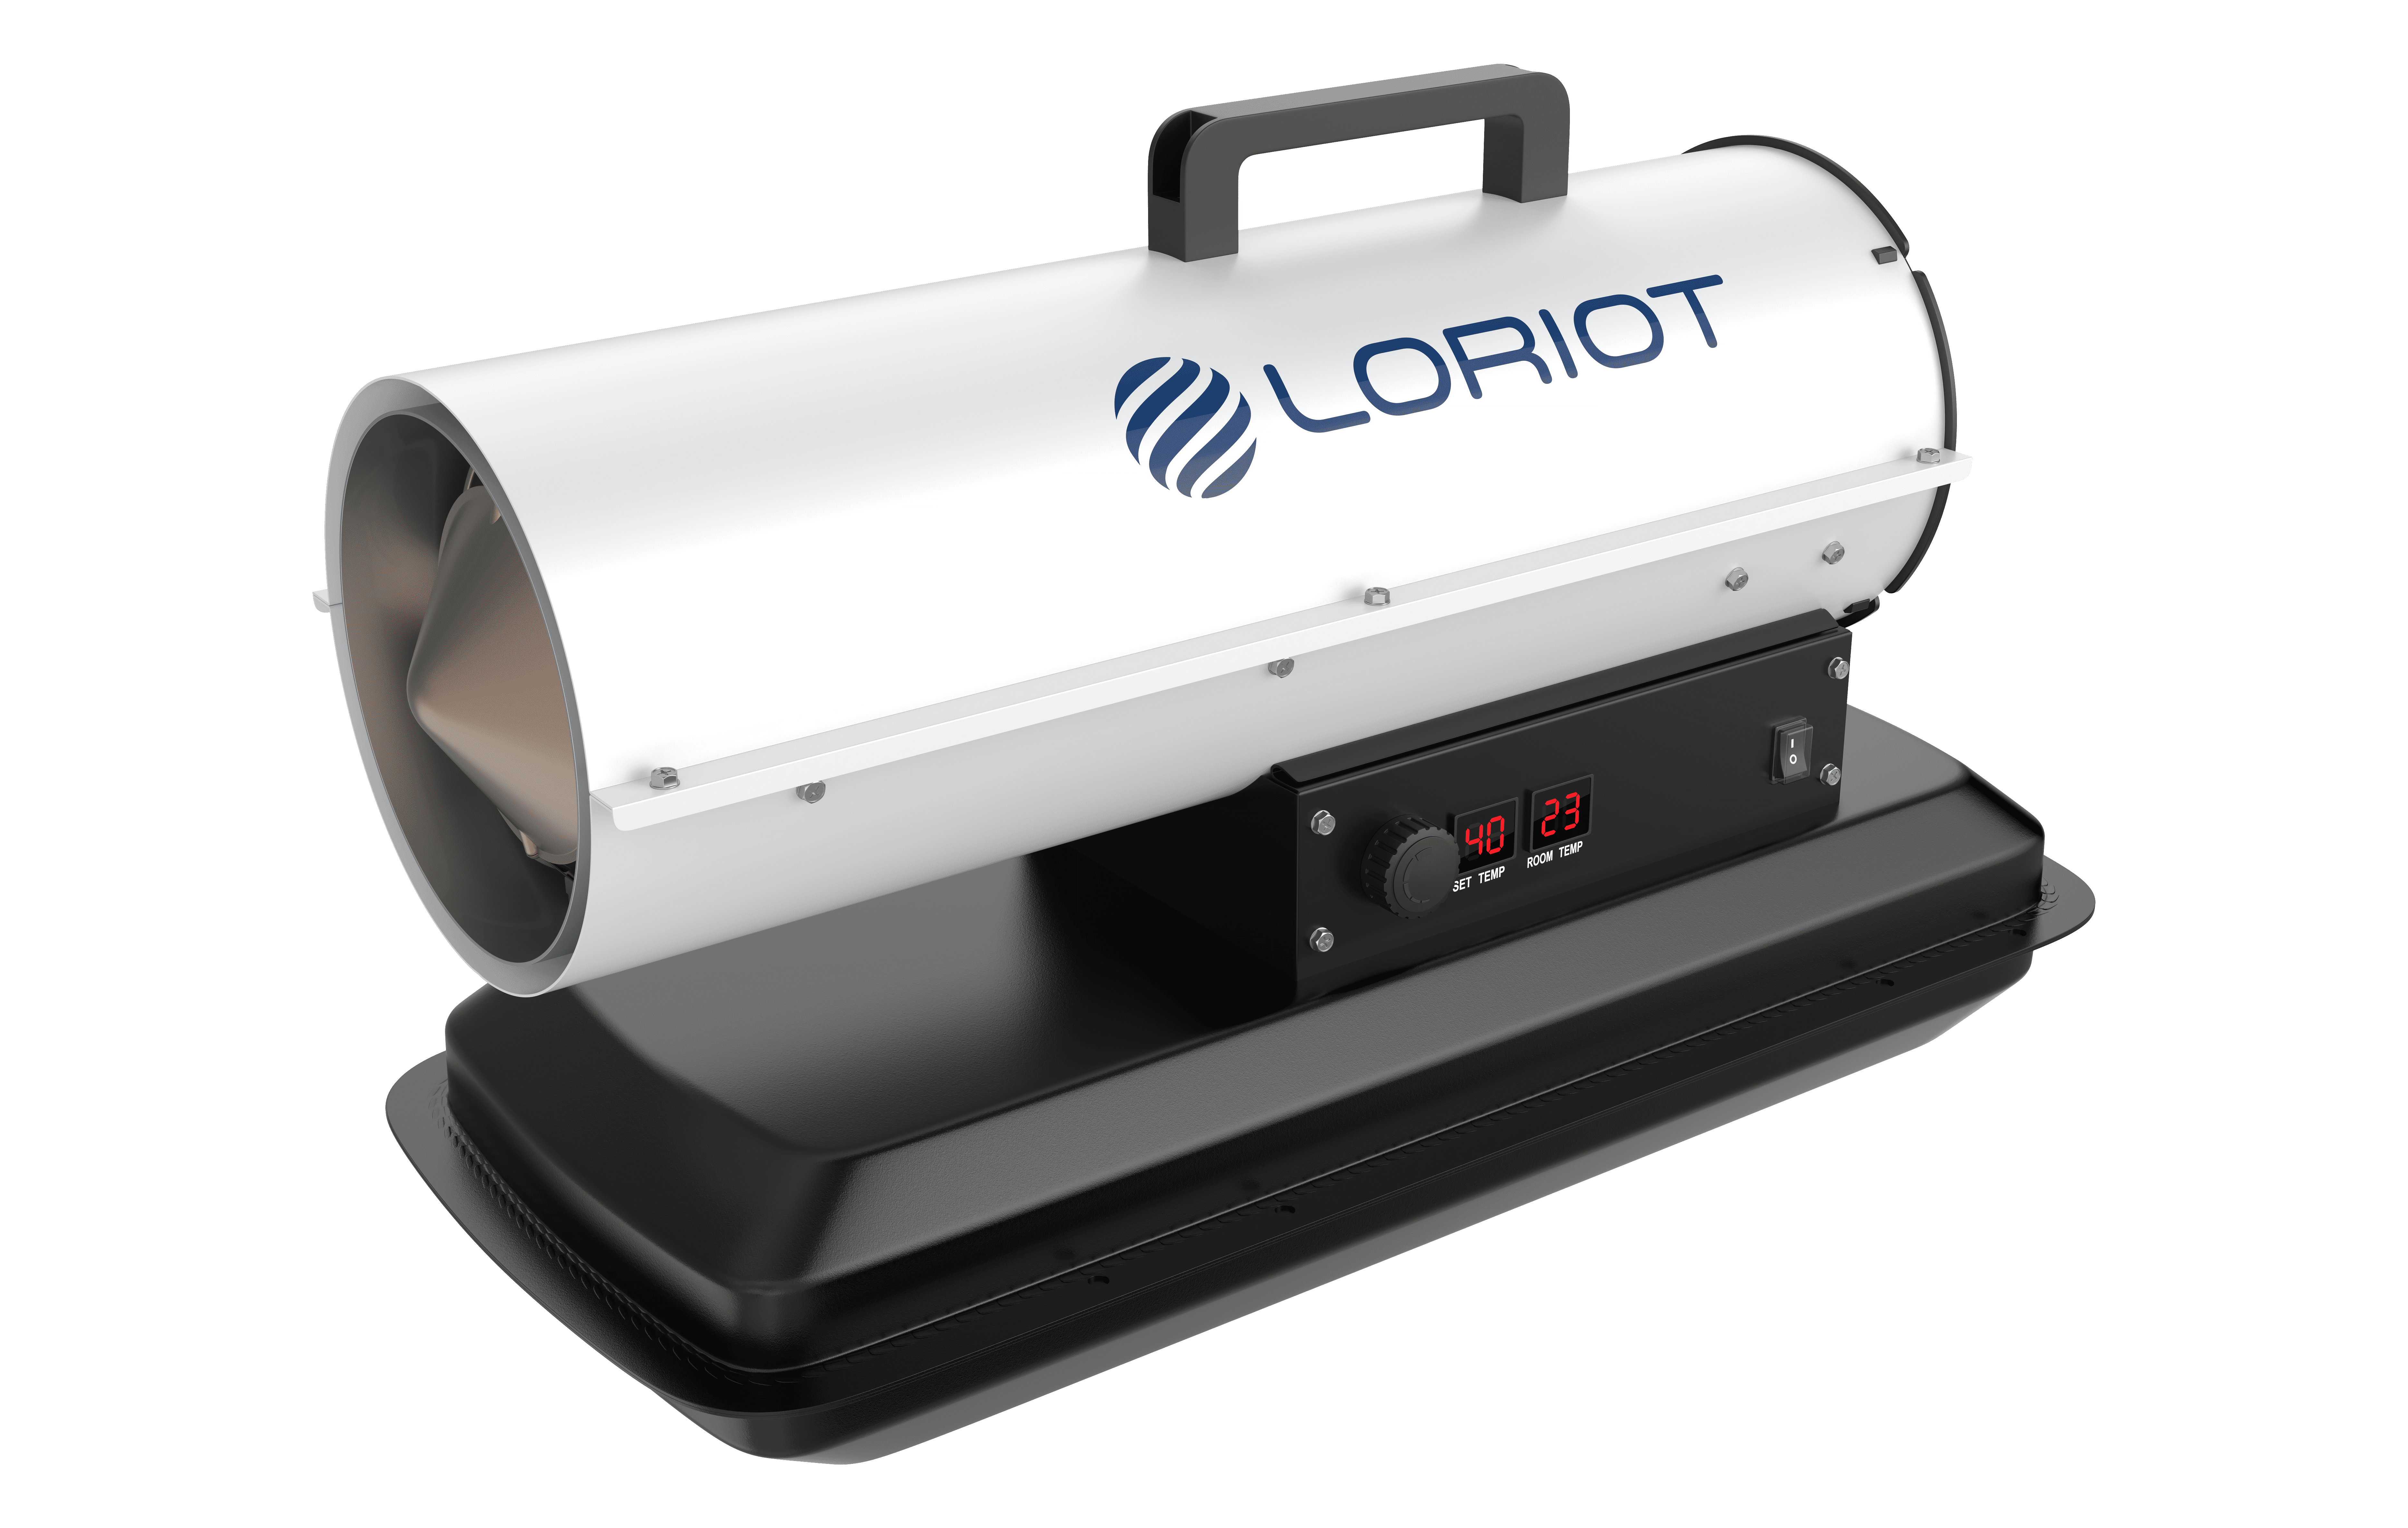 Loriot Rocket LHD-10